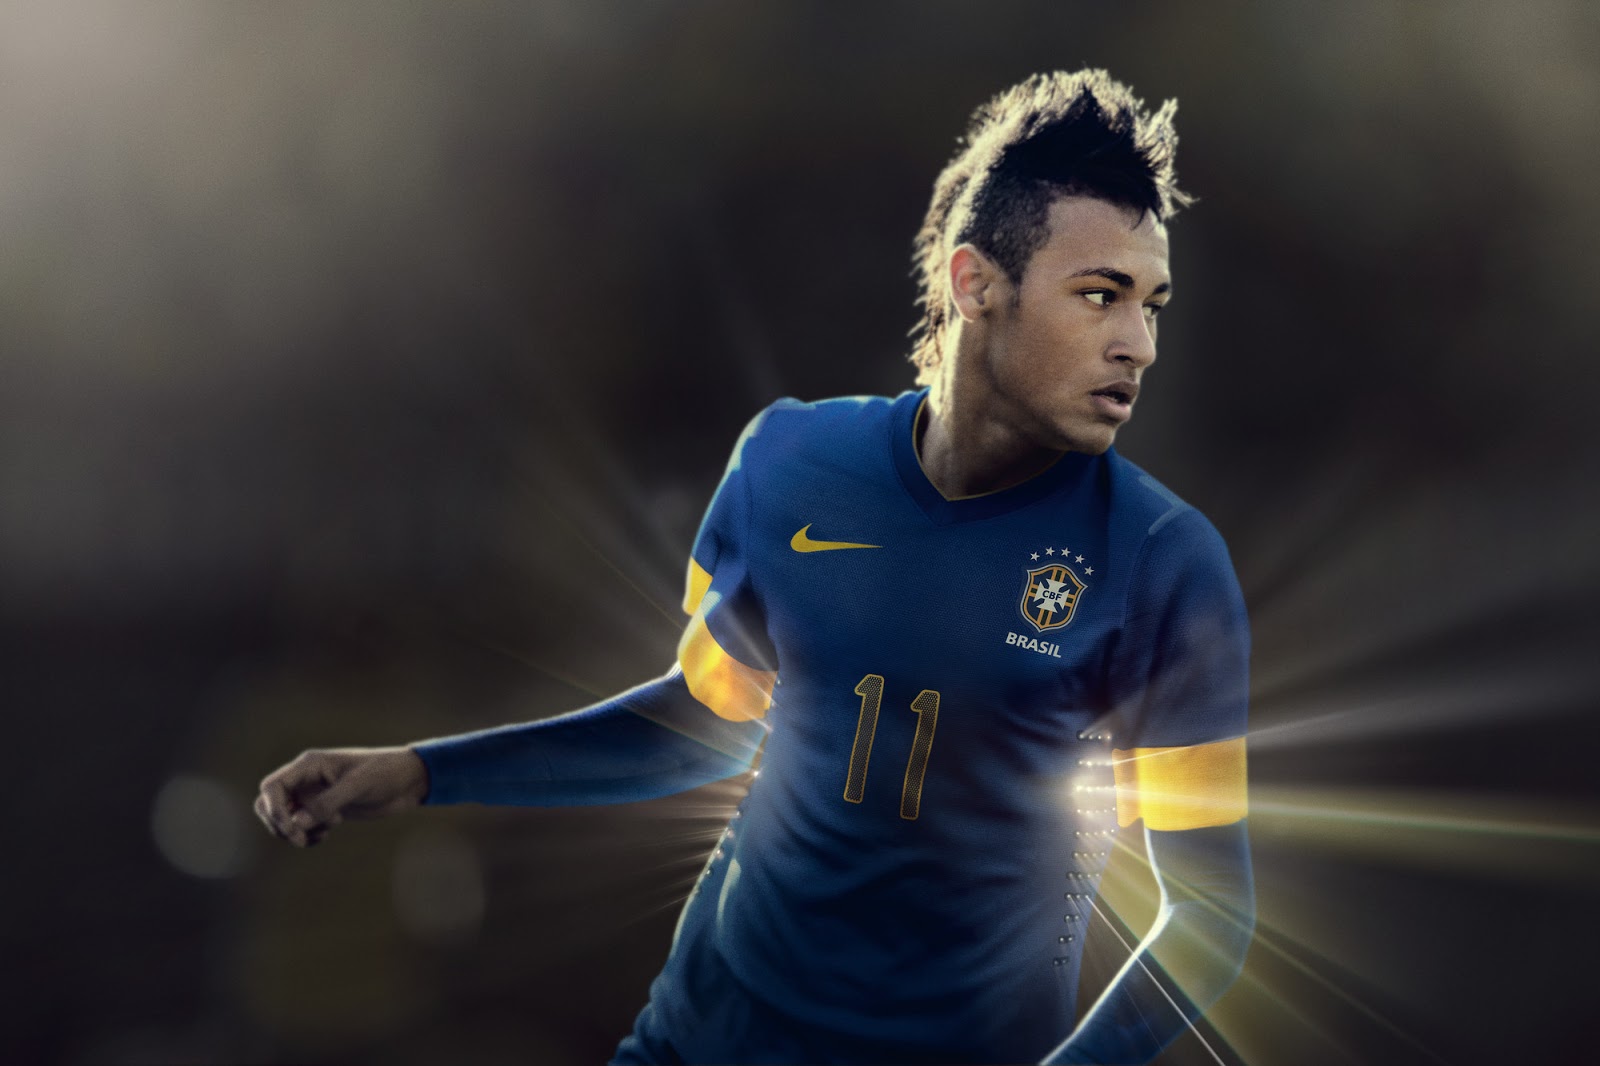 neymar meilleur fond d'écran,joueur de football,joueur,joueur de football,football,équipement sportif